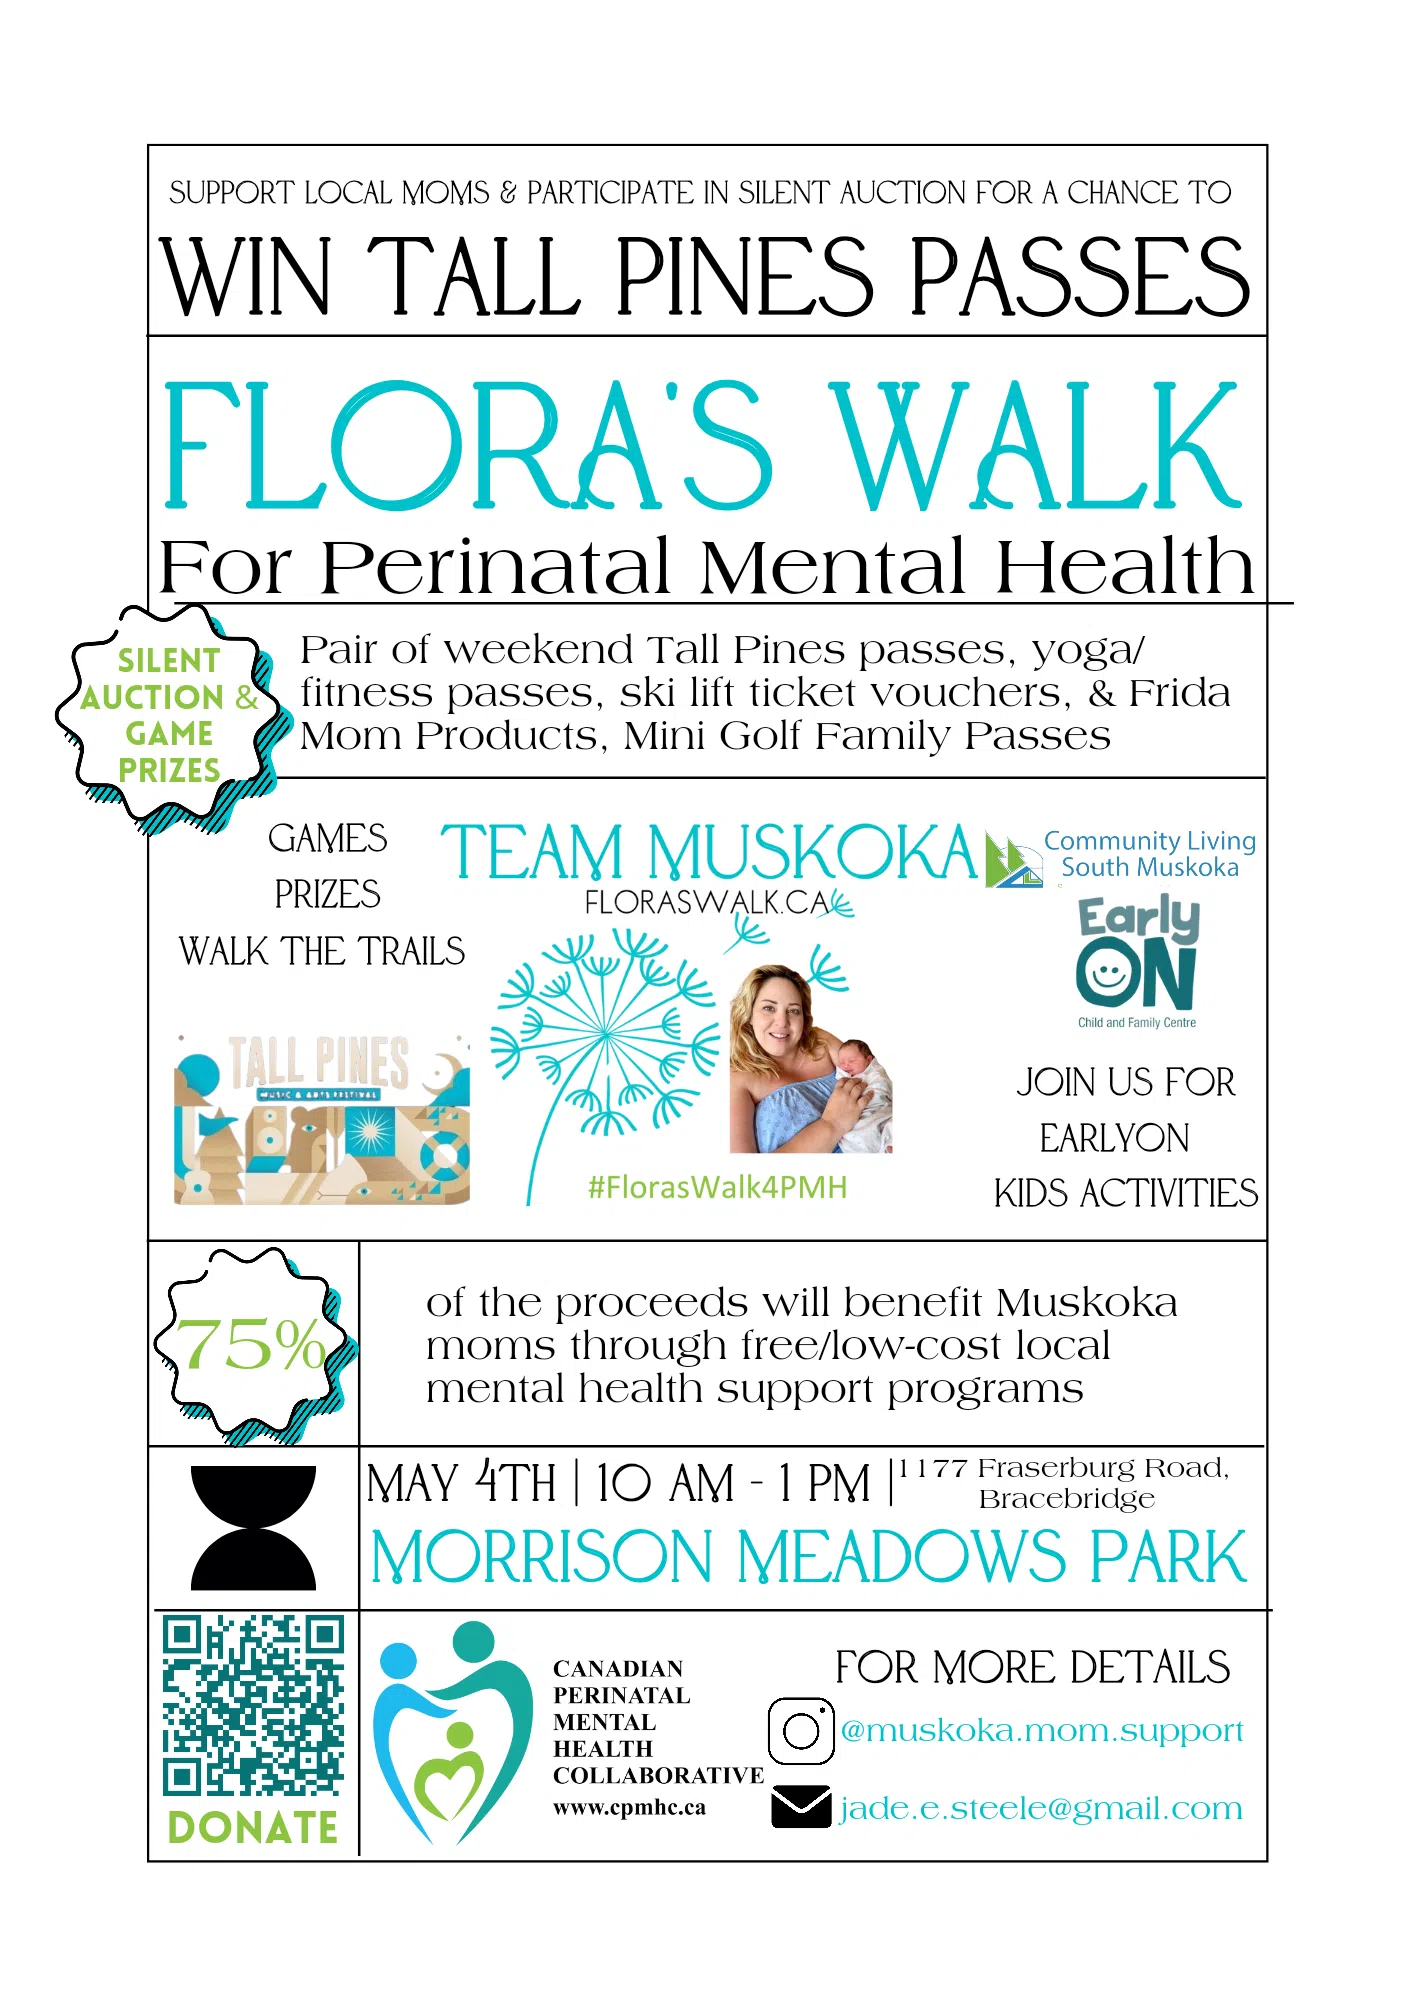 First Perinatal Mental Health Walk in Muskoka Happens May 4th